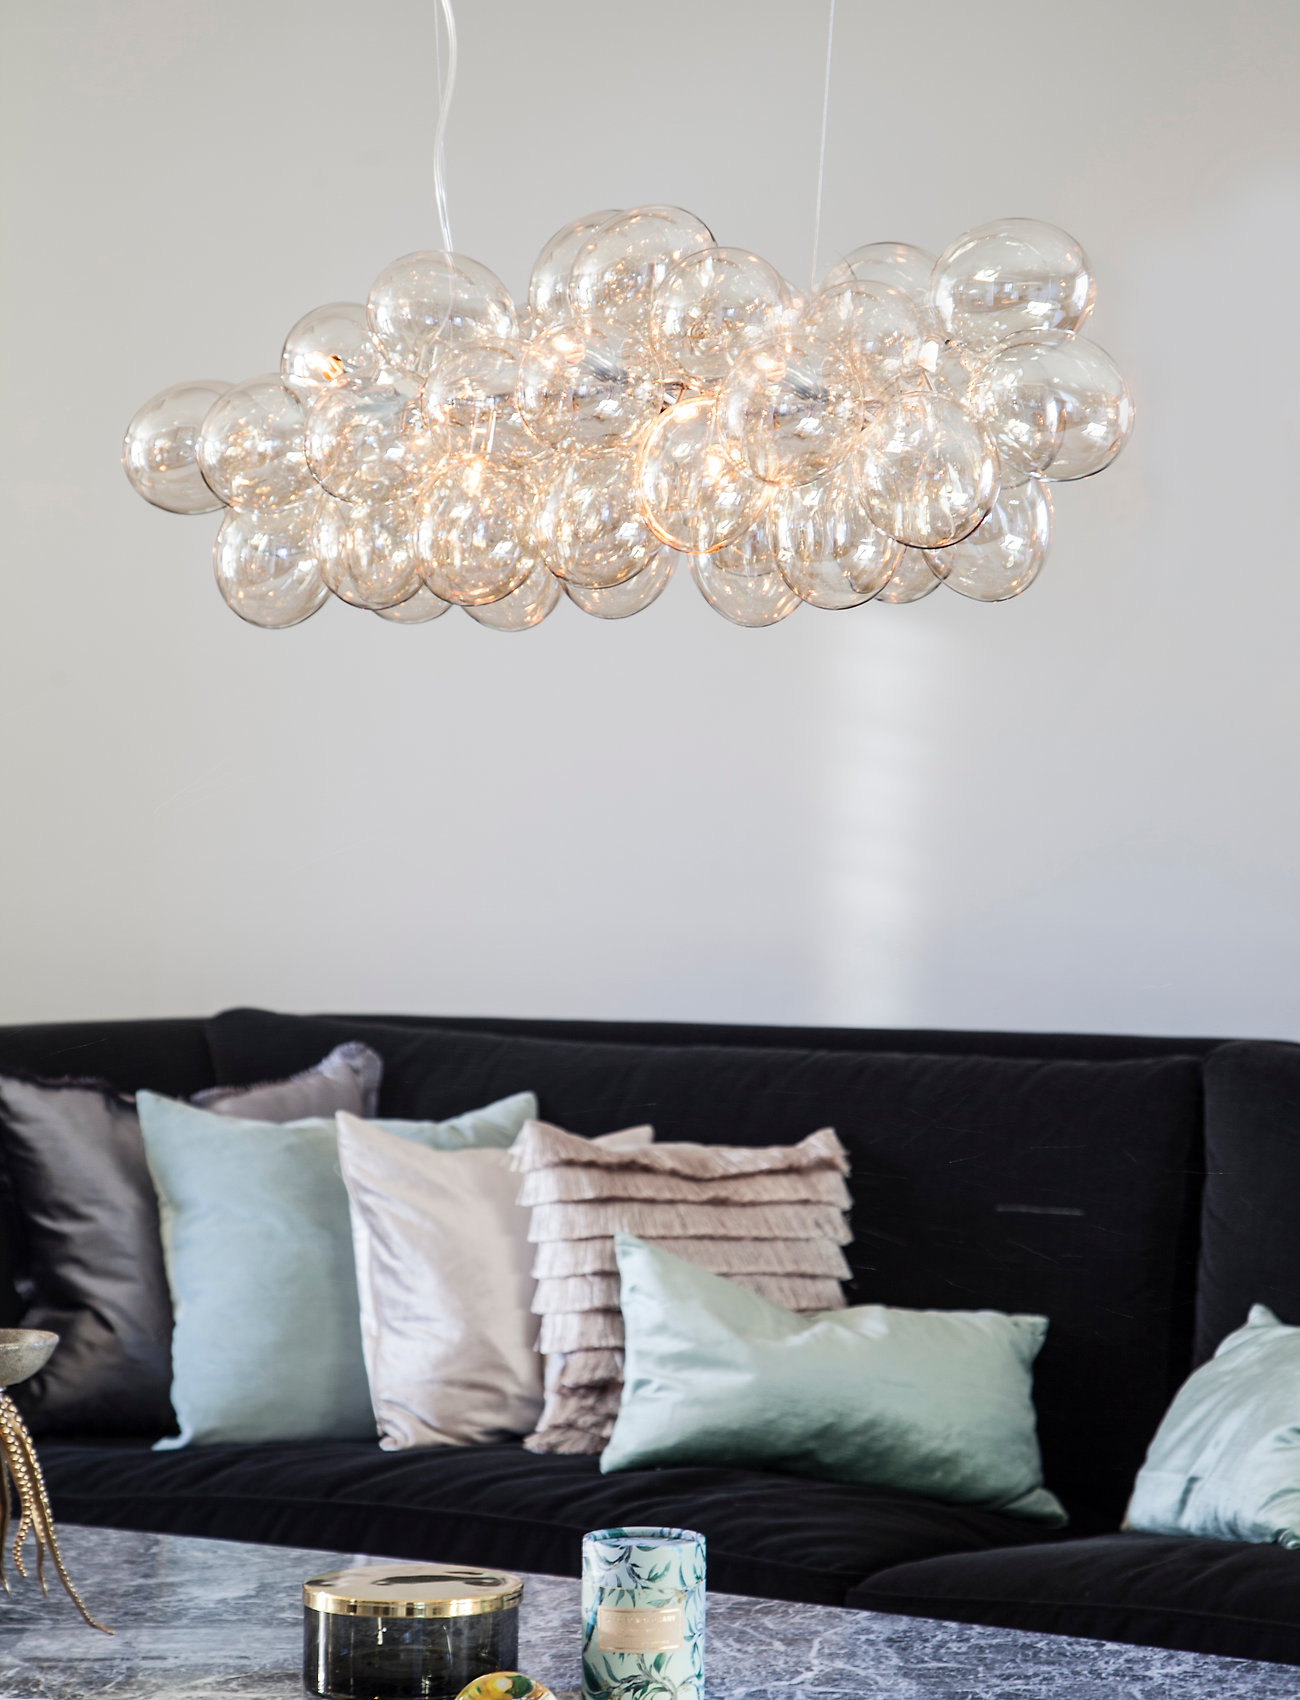 By Rydéns - Gross Bar ceilinglamp L80cm - riippuvalaisimet - amber - 1